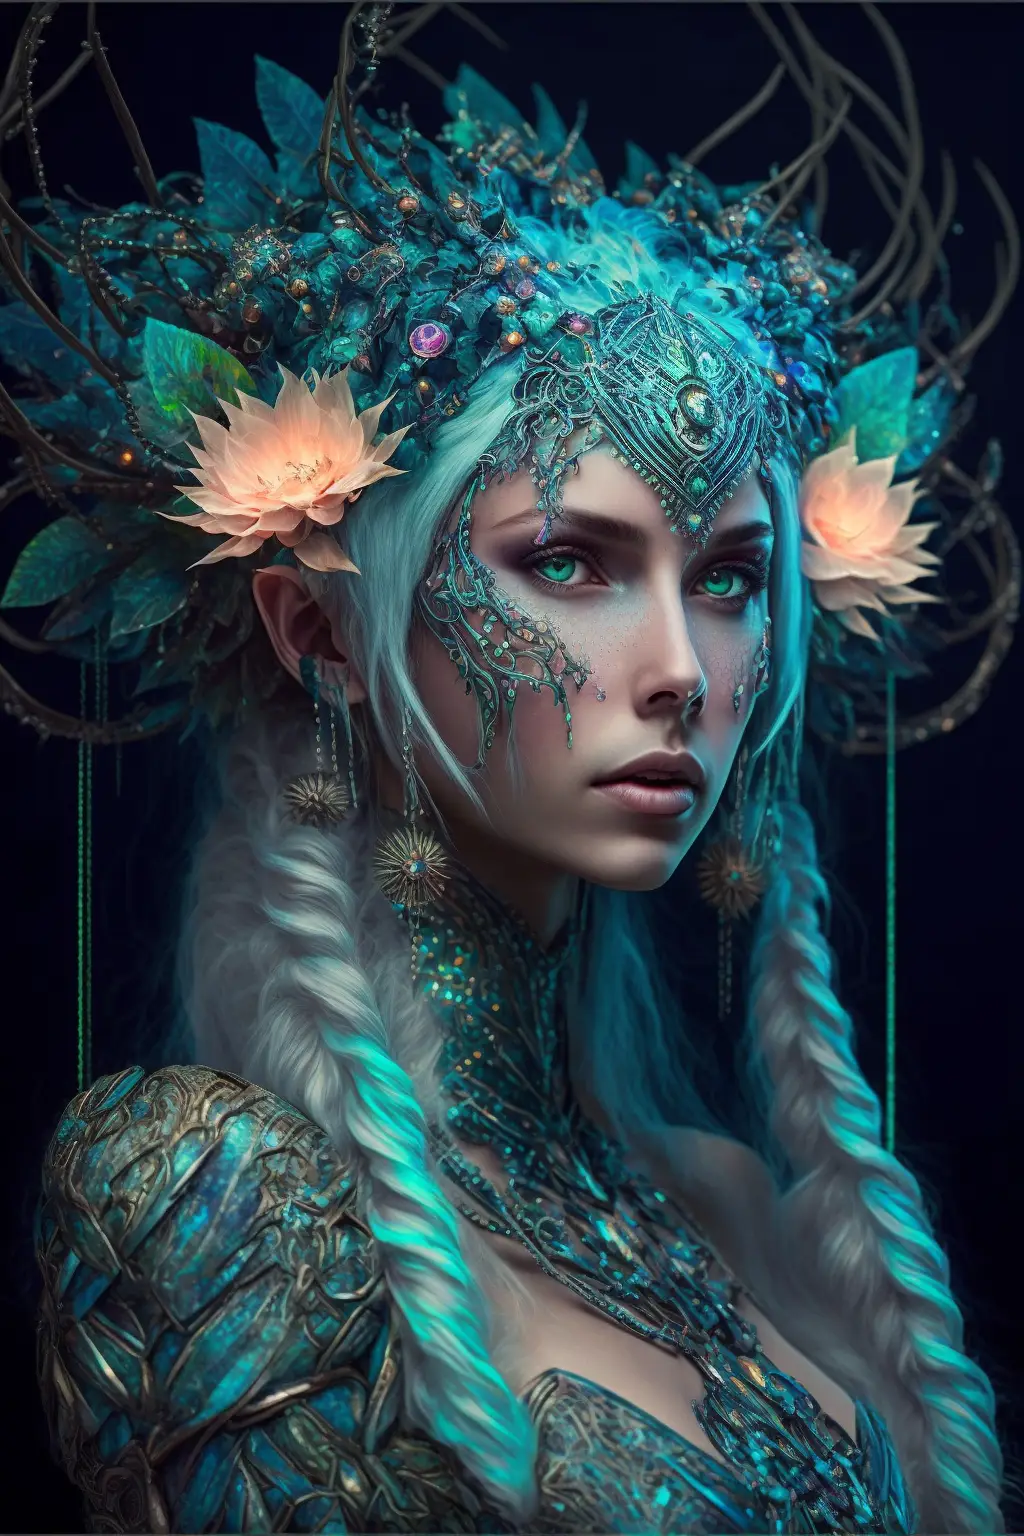 3/4 Length, Young Elven Princess, Futuristic, Bioluminescent, Intricate Translucent Top, Elaborate Headpiece, Vivid Colours, Enchanted Forest, Insane Details, Photorealistic, --Ar 2:3 --V 4 --Q 2 --Q 2